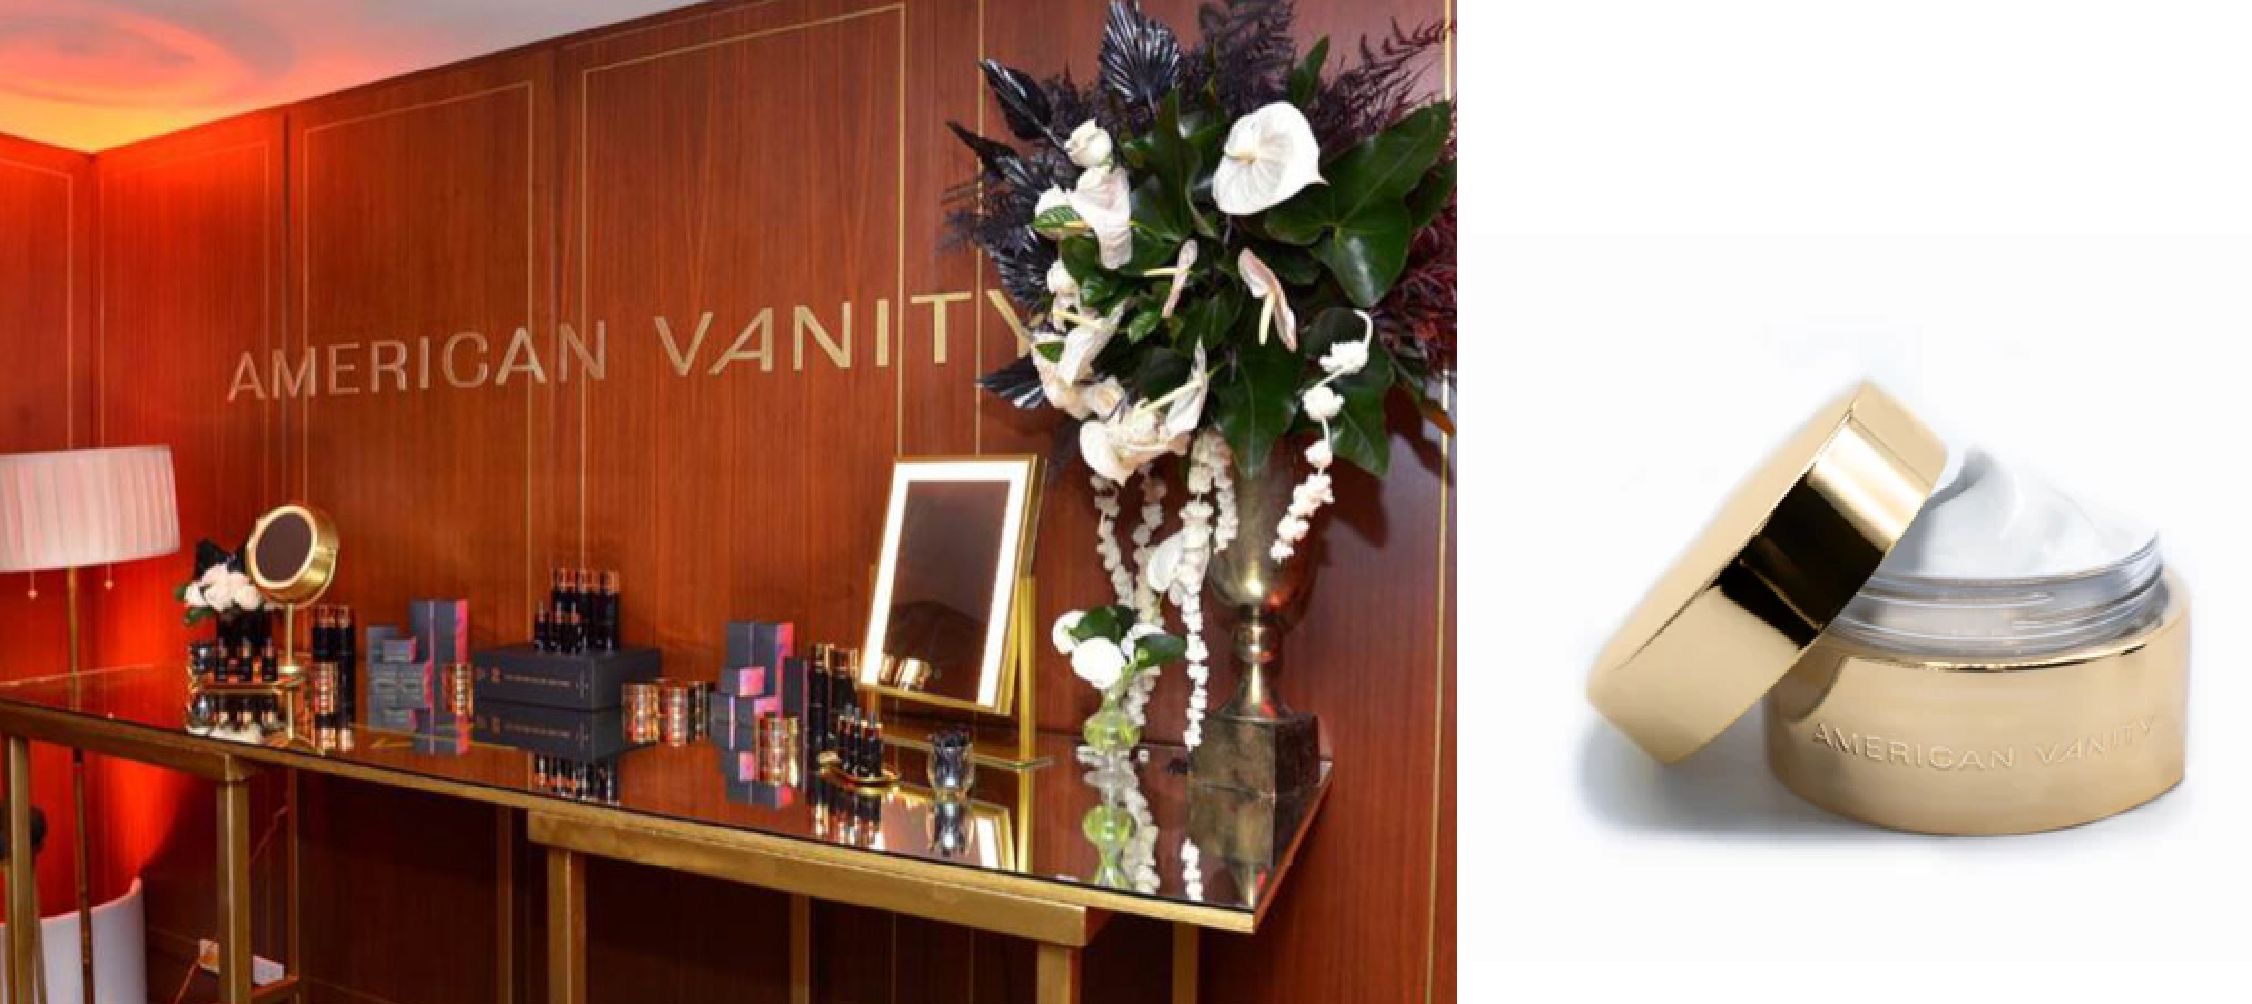 American Vanity: The World’s First Science-Based Luxury CBD Skincare Brand